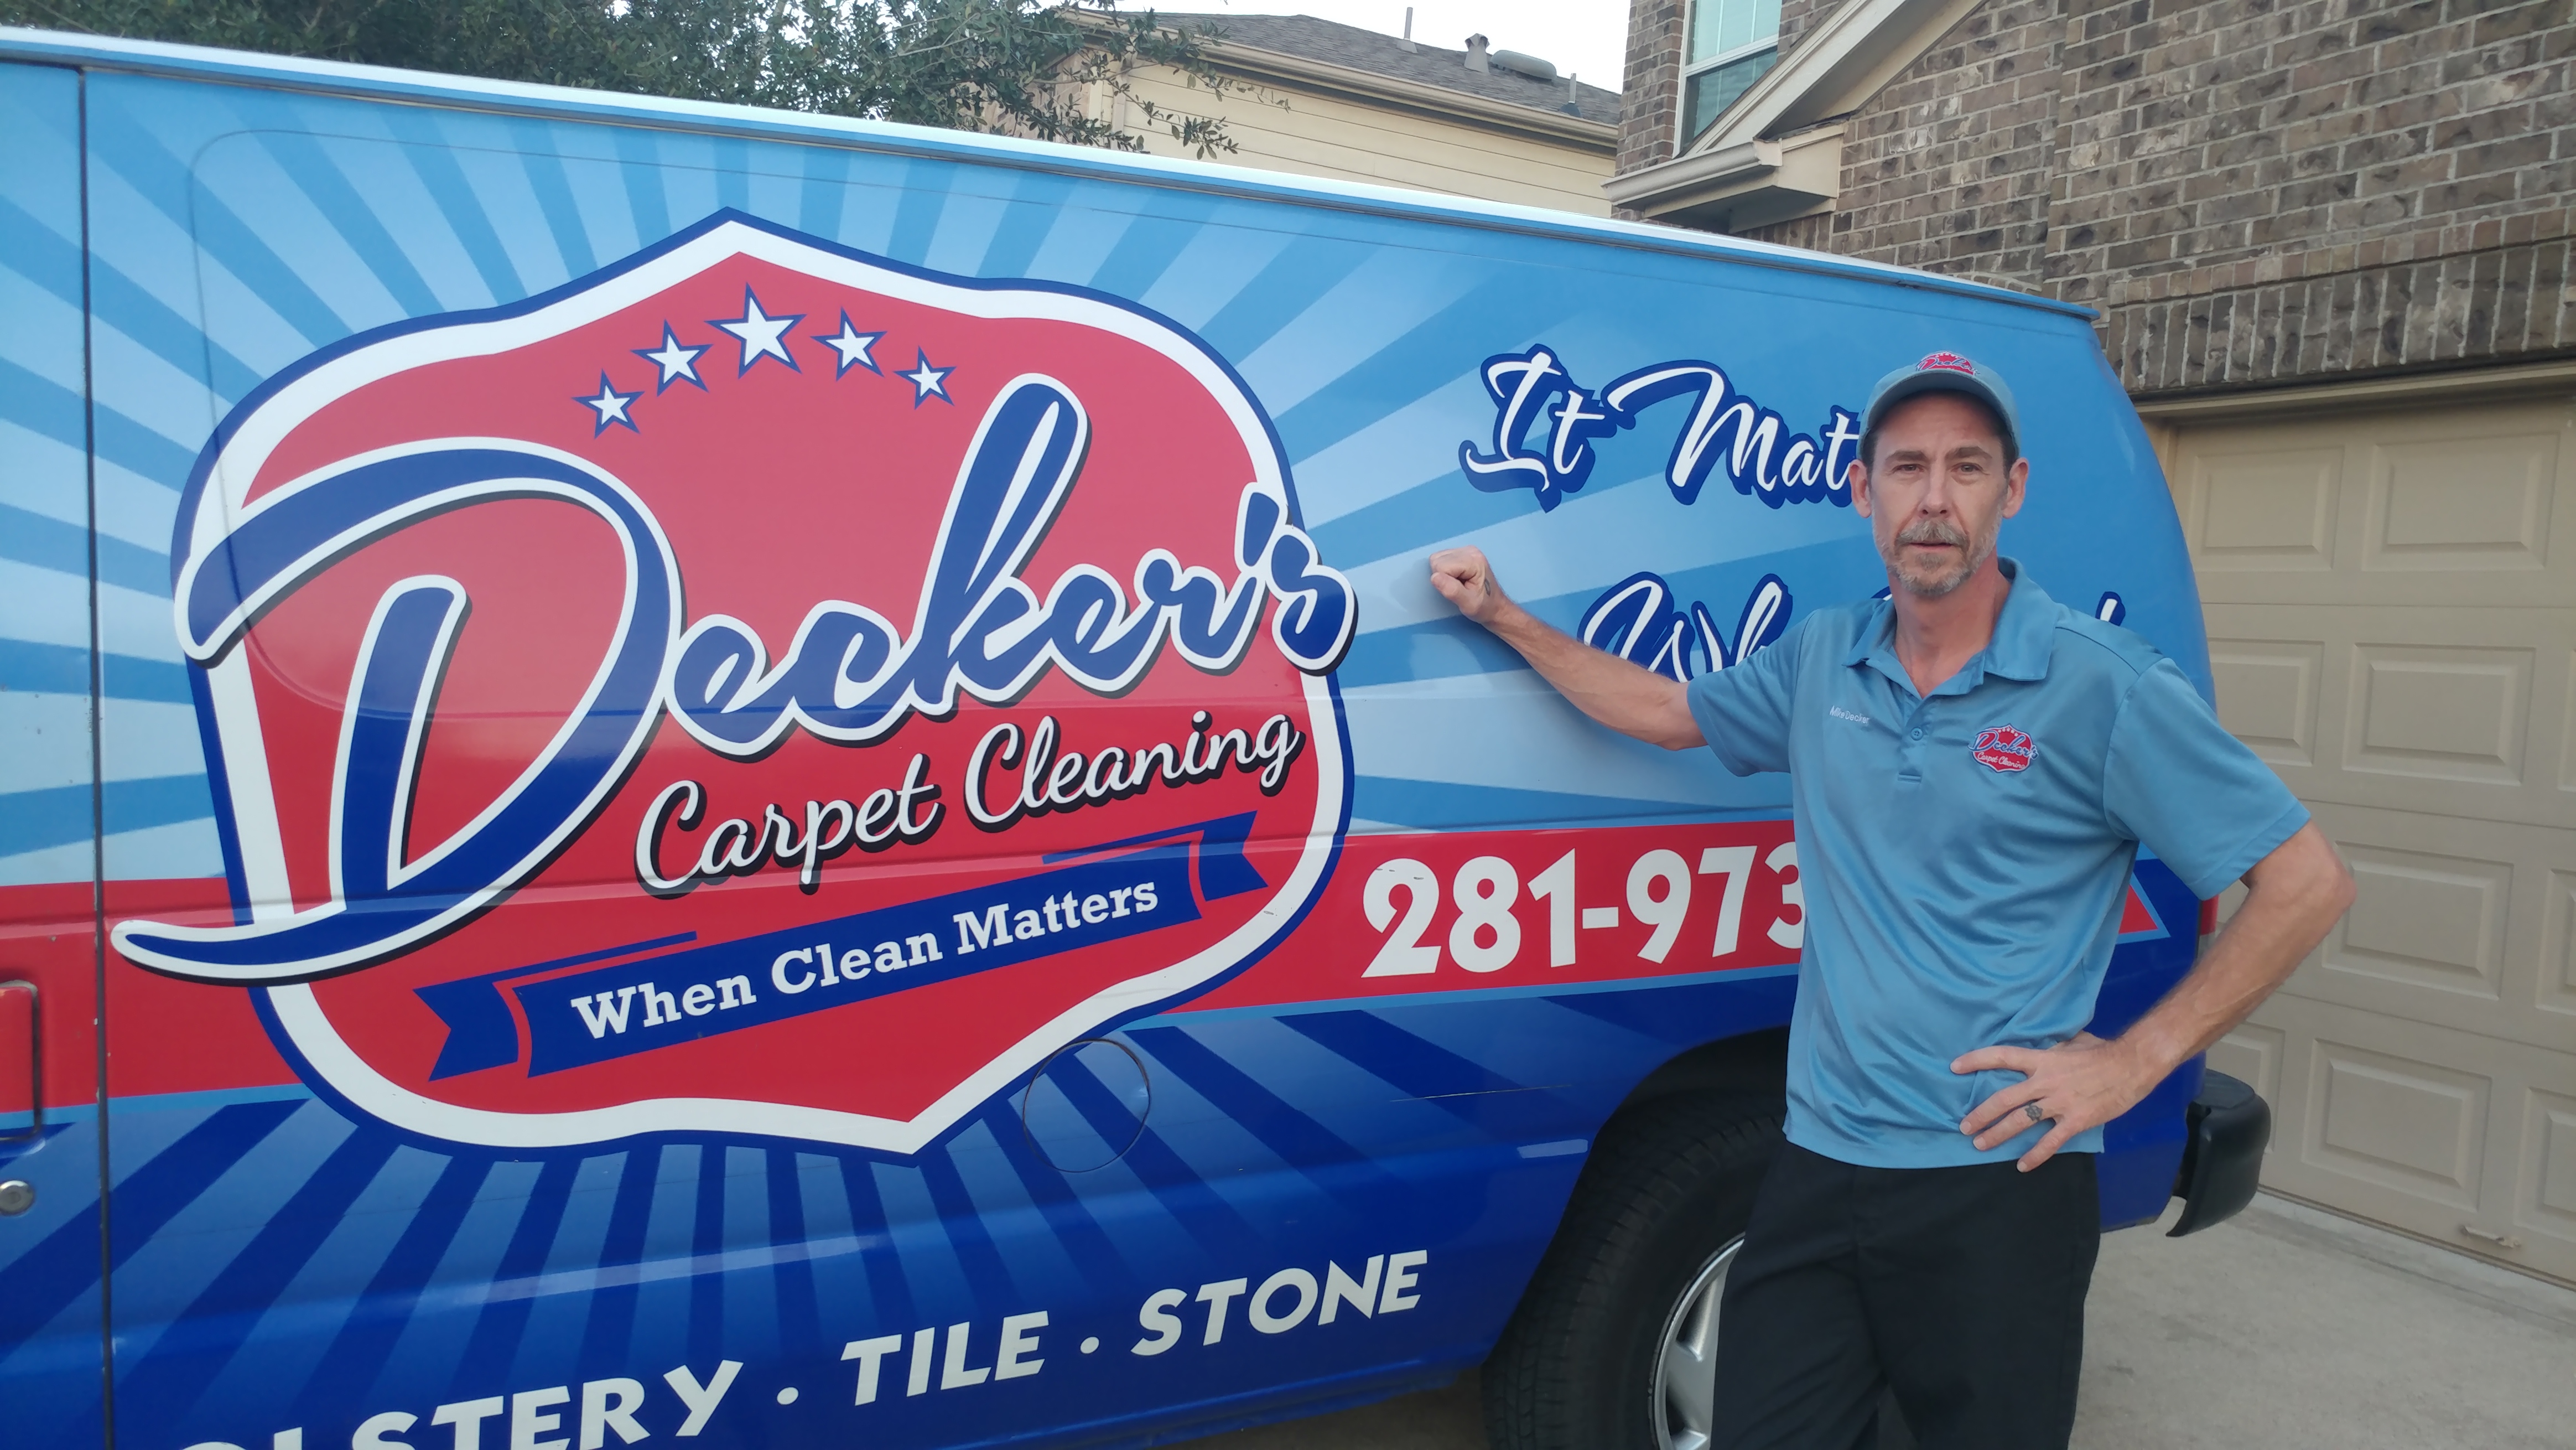 Mike Decker with Decker's Carpet Cleaning Van